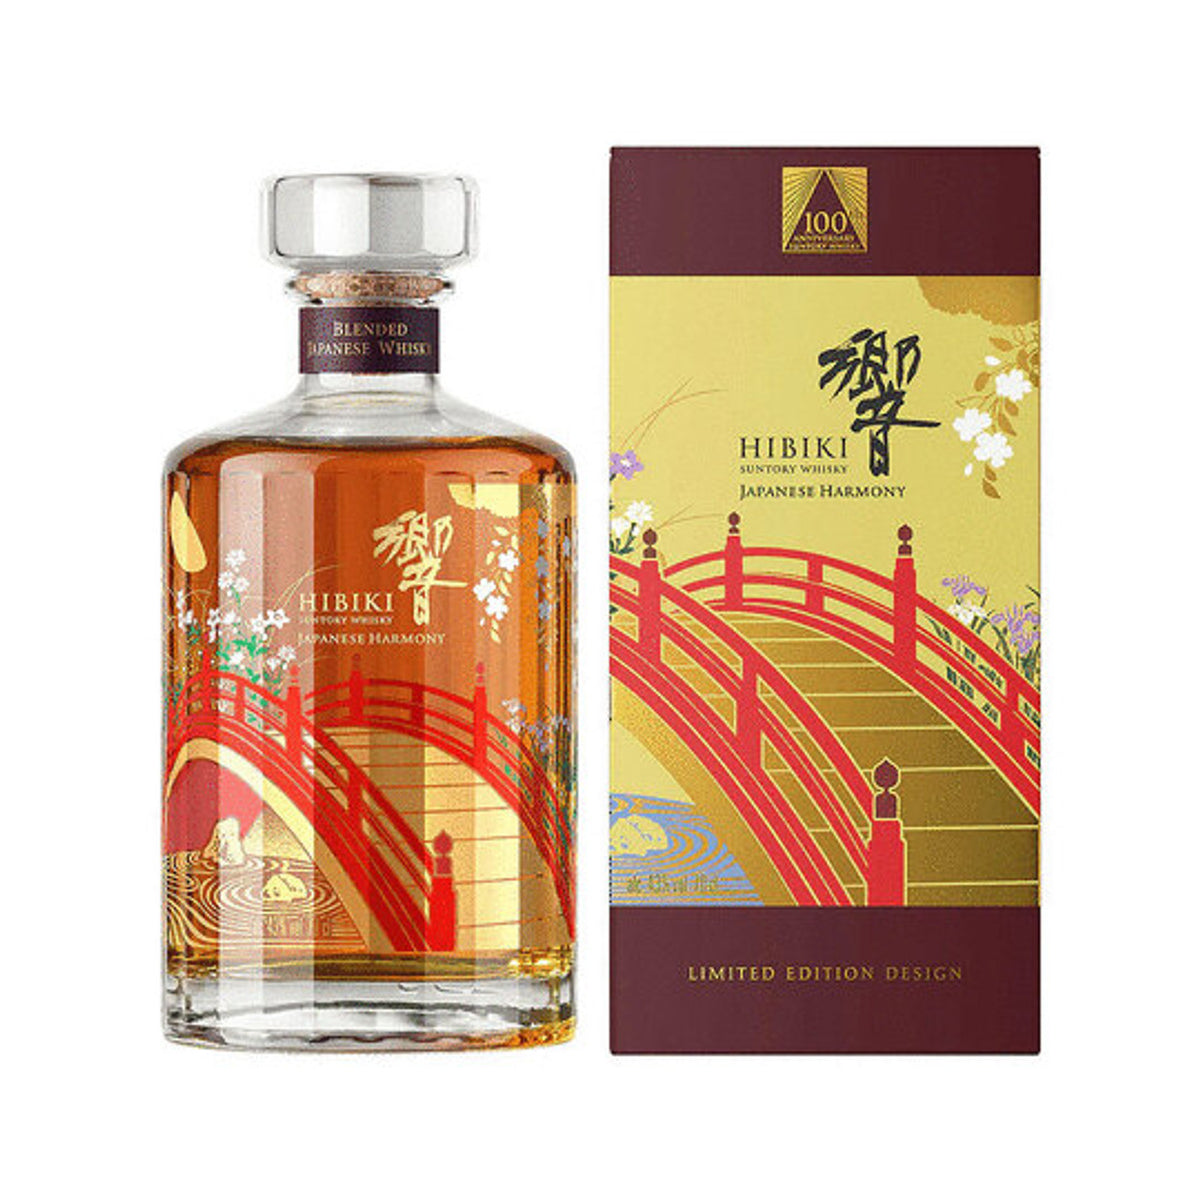 Hibiki 'Japanese Harmony' 100th Anniversary Limited Edition Design Blended Whisky 750ml,.